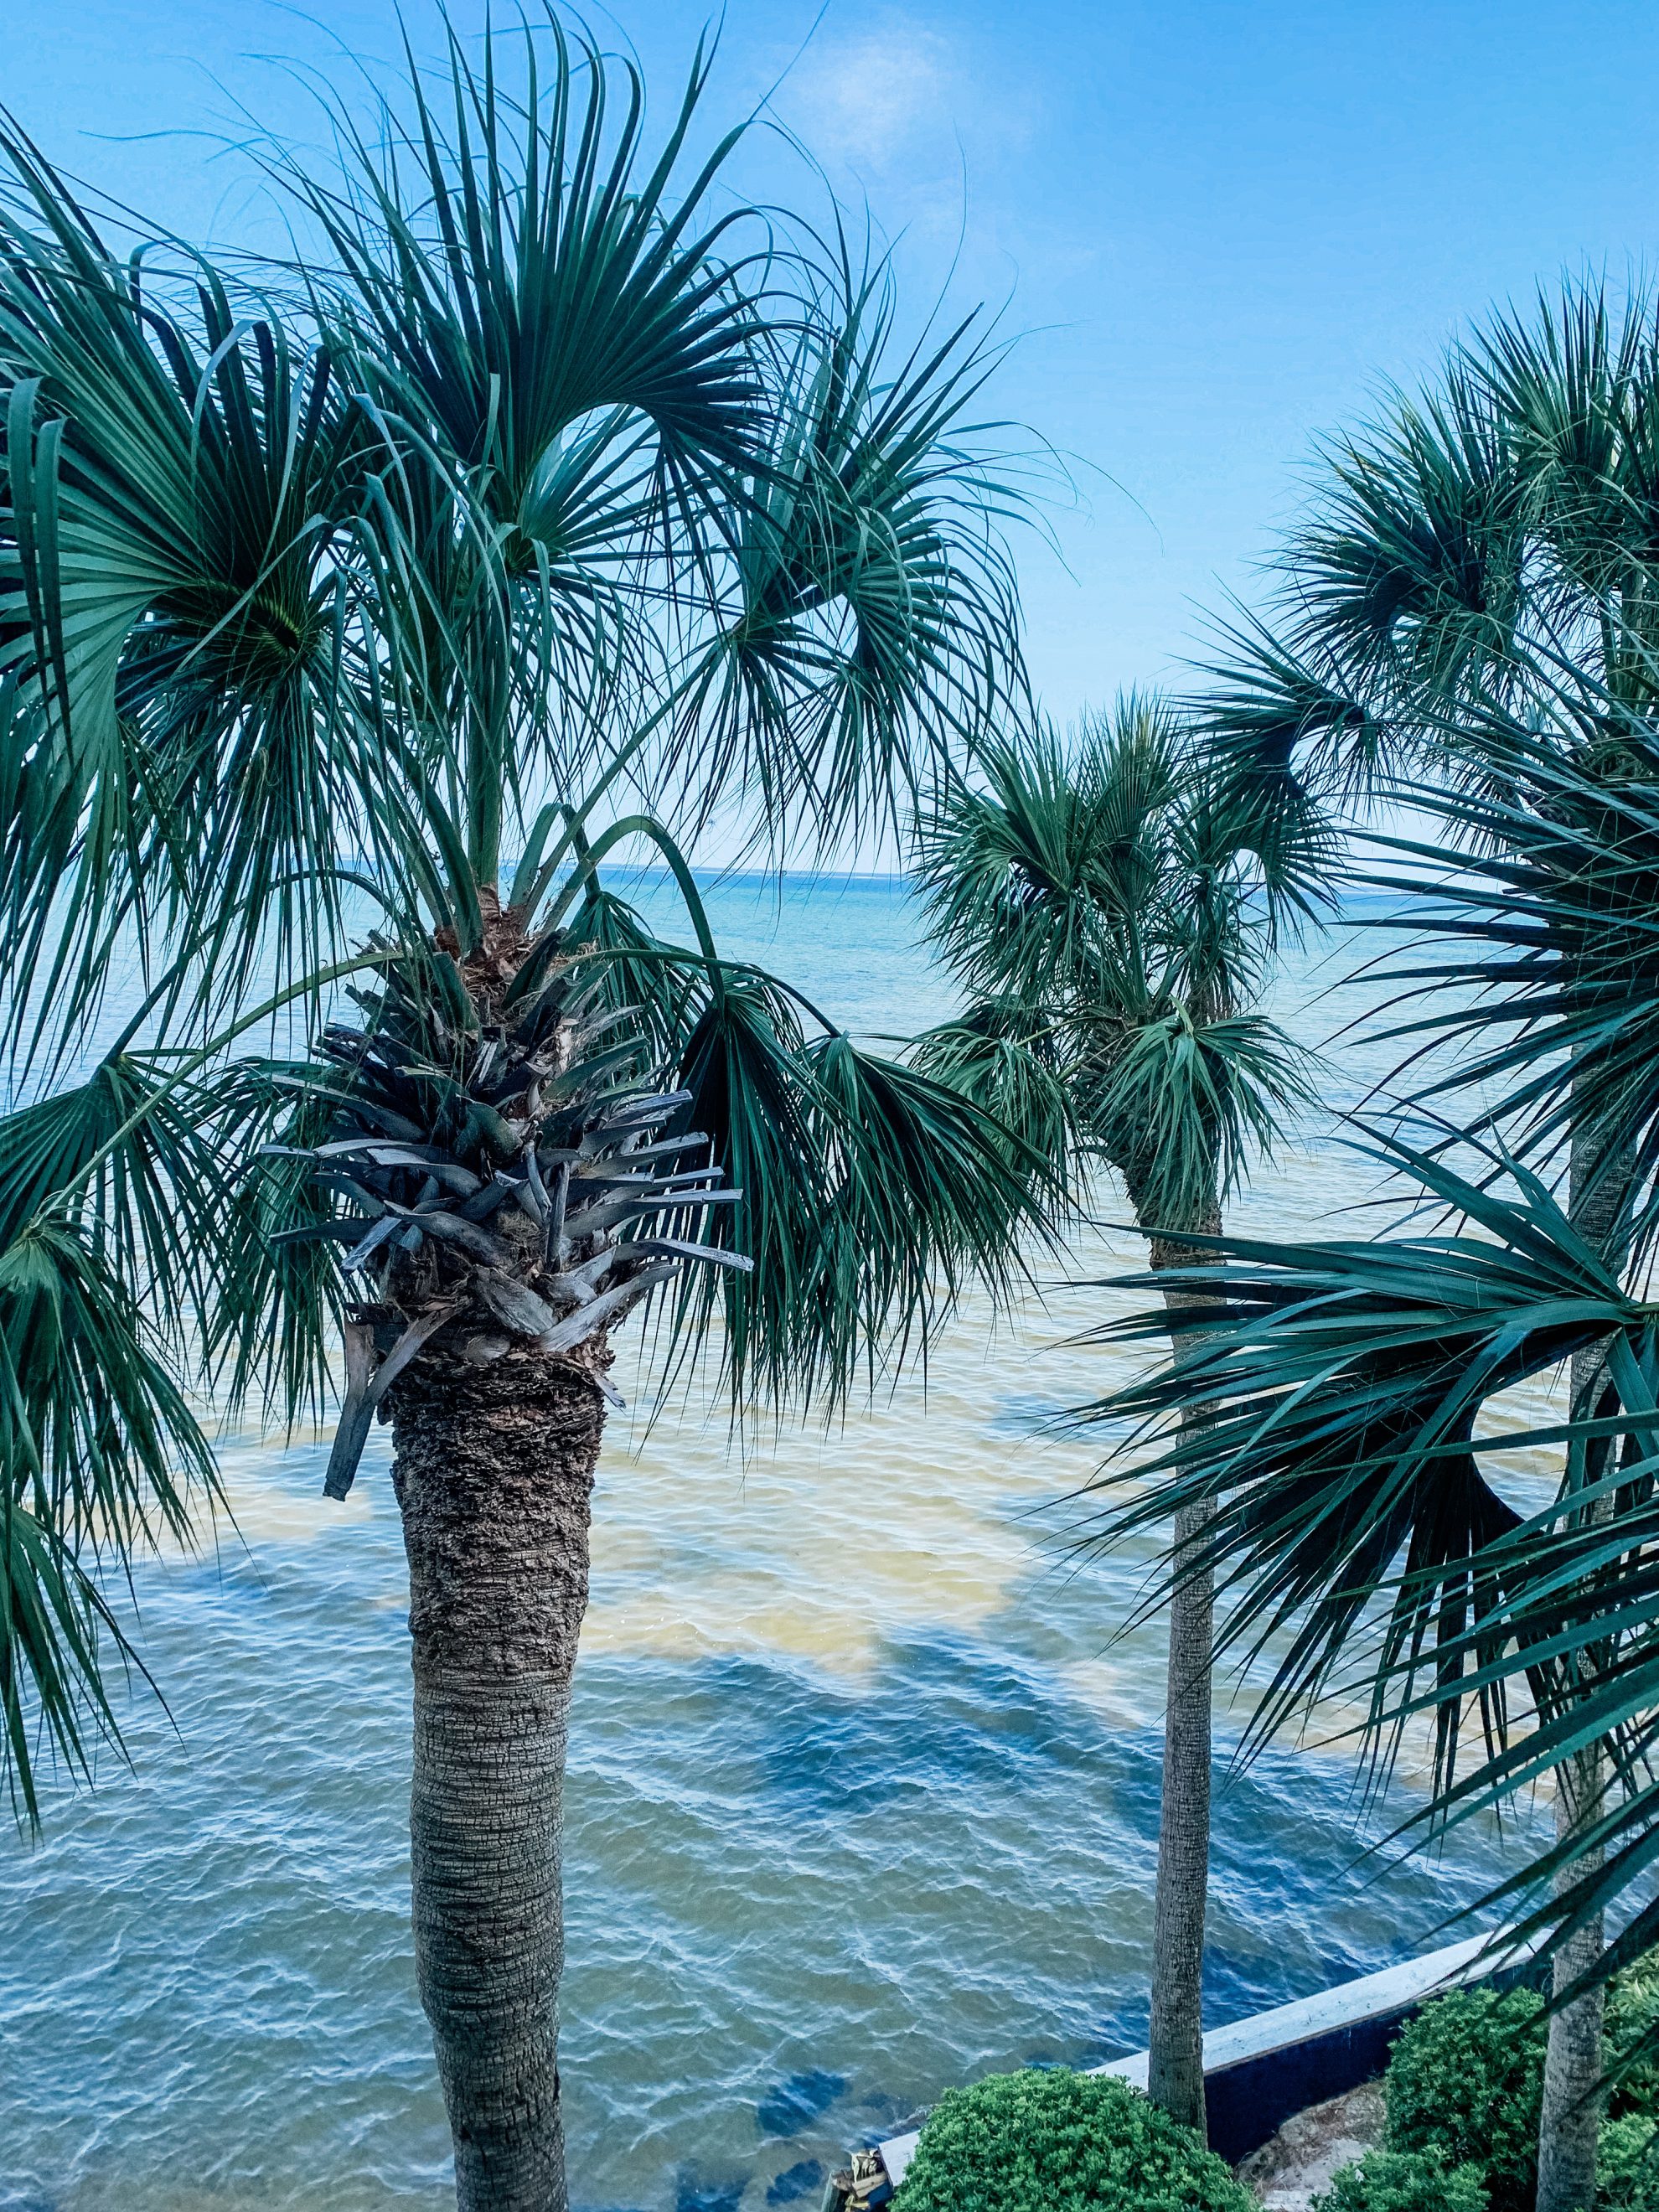 How to Enjoy the Destin, Florida, Beaches (without breaking the bank) #destin #destinfloridacom #sandestin #;paradisecityabb